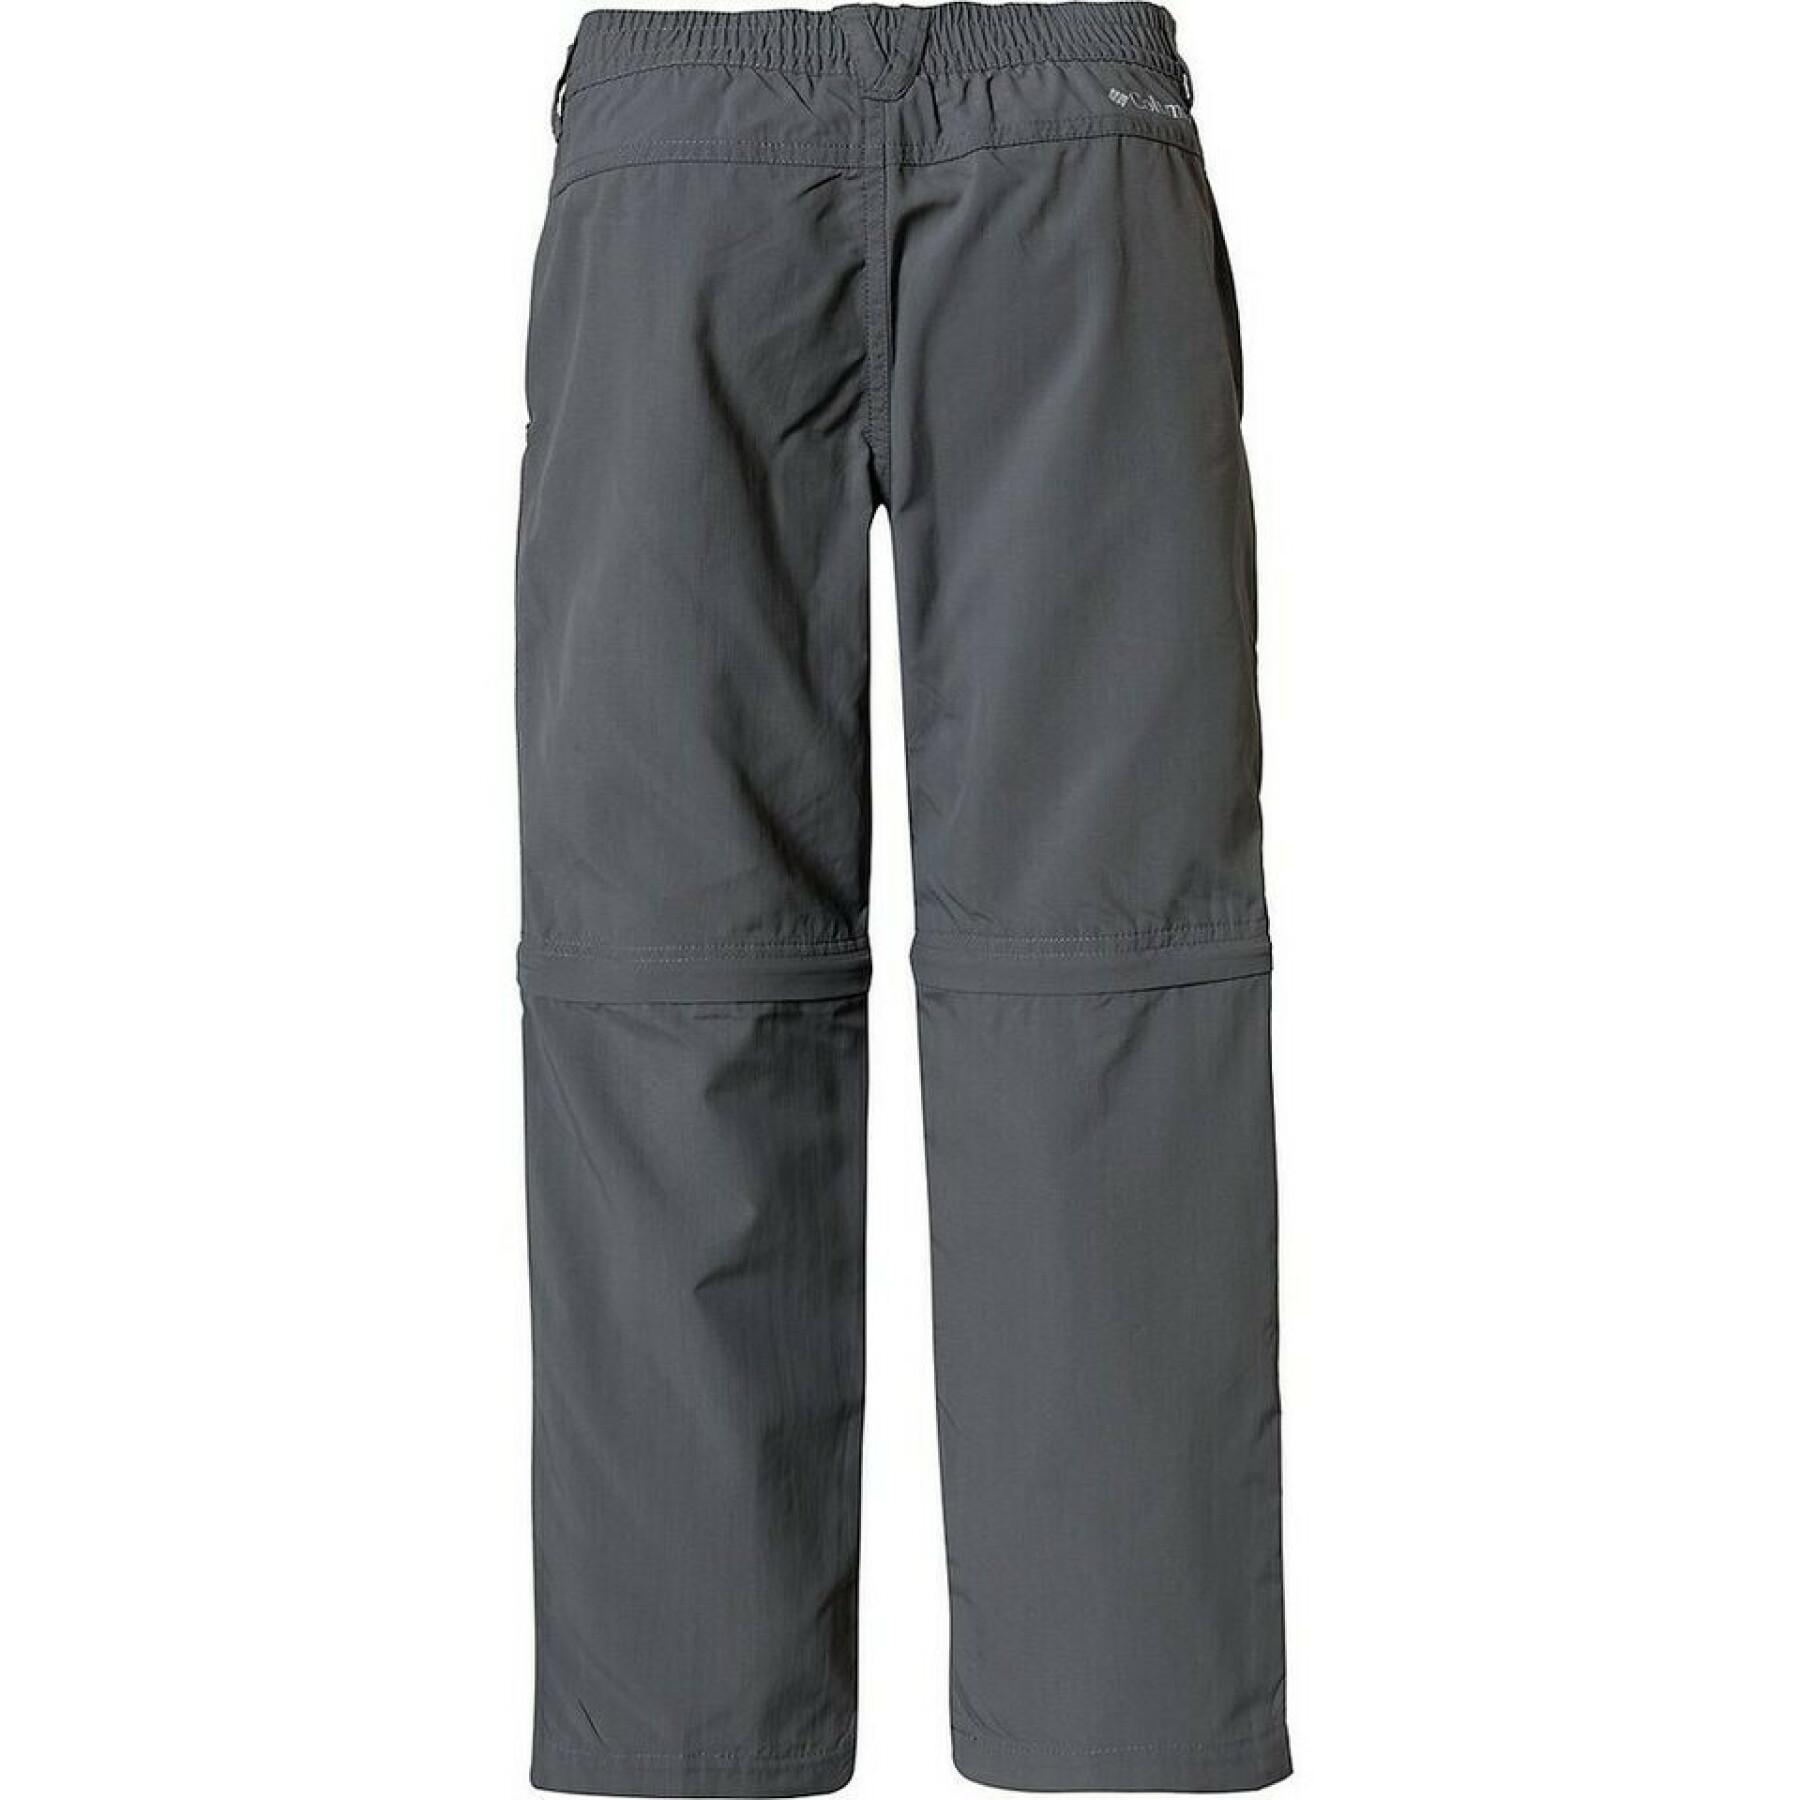 Boy's Convertible Pants Columbia Silver Ridge IV